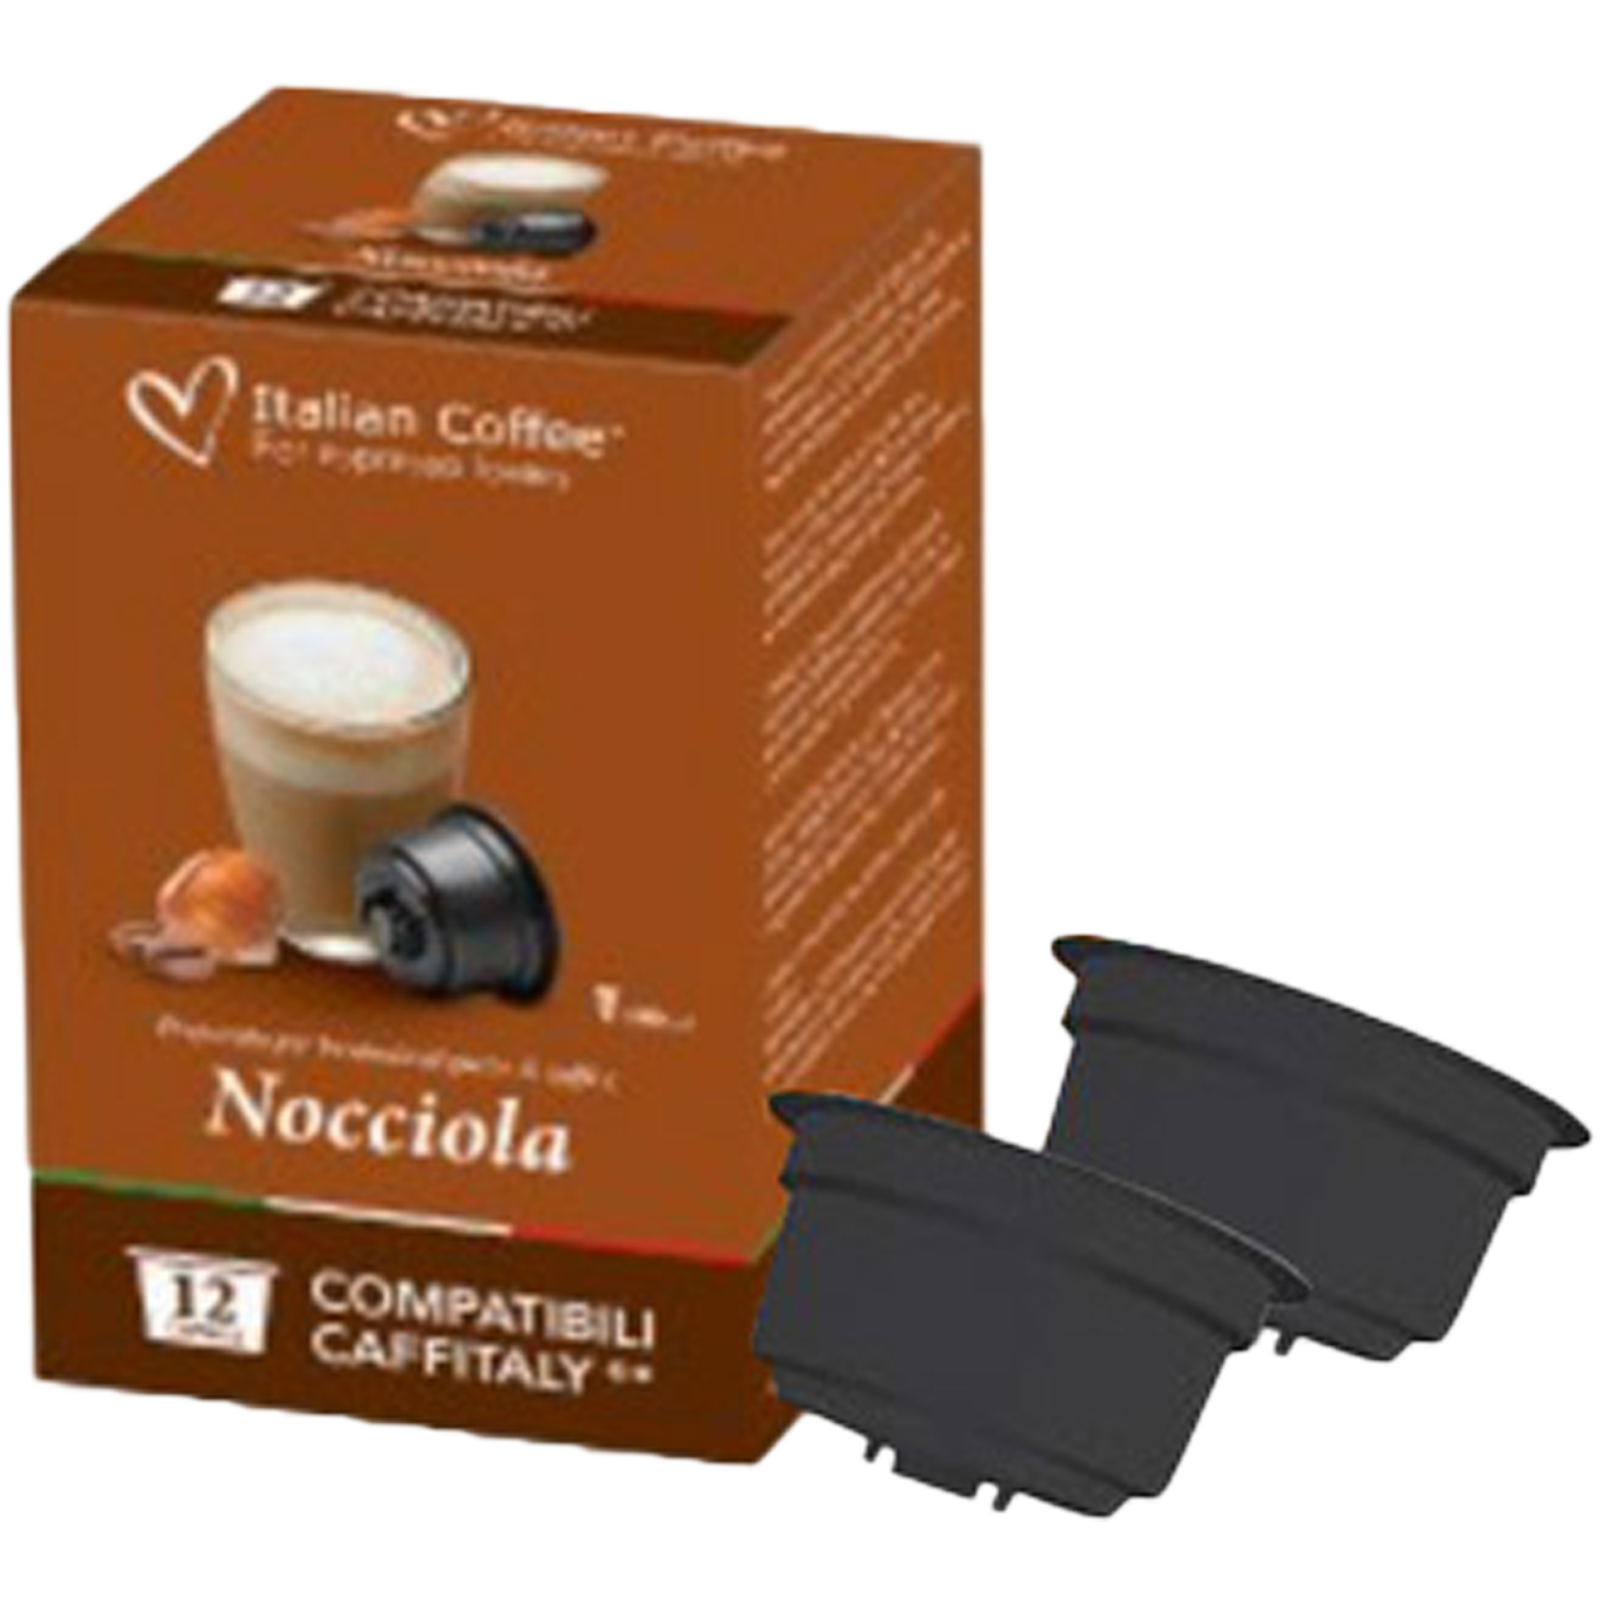 Nocciola, 72 capsule compatibile Cafissimo/Caffitaly/Beanz, Italian Coffee